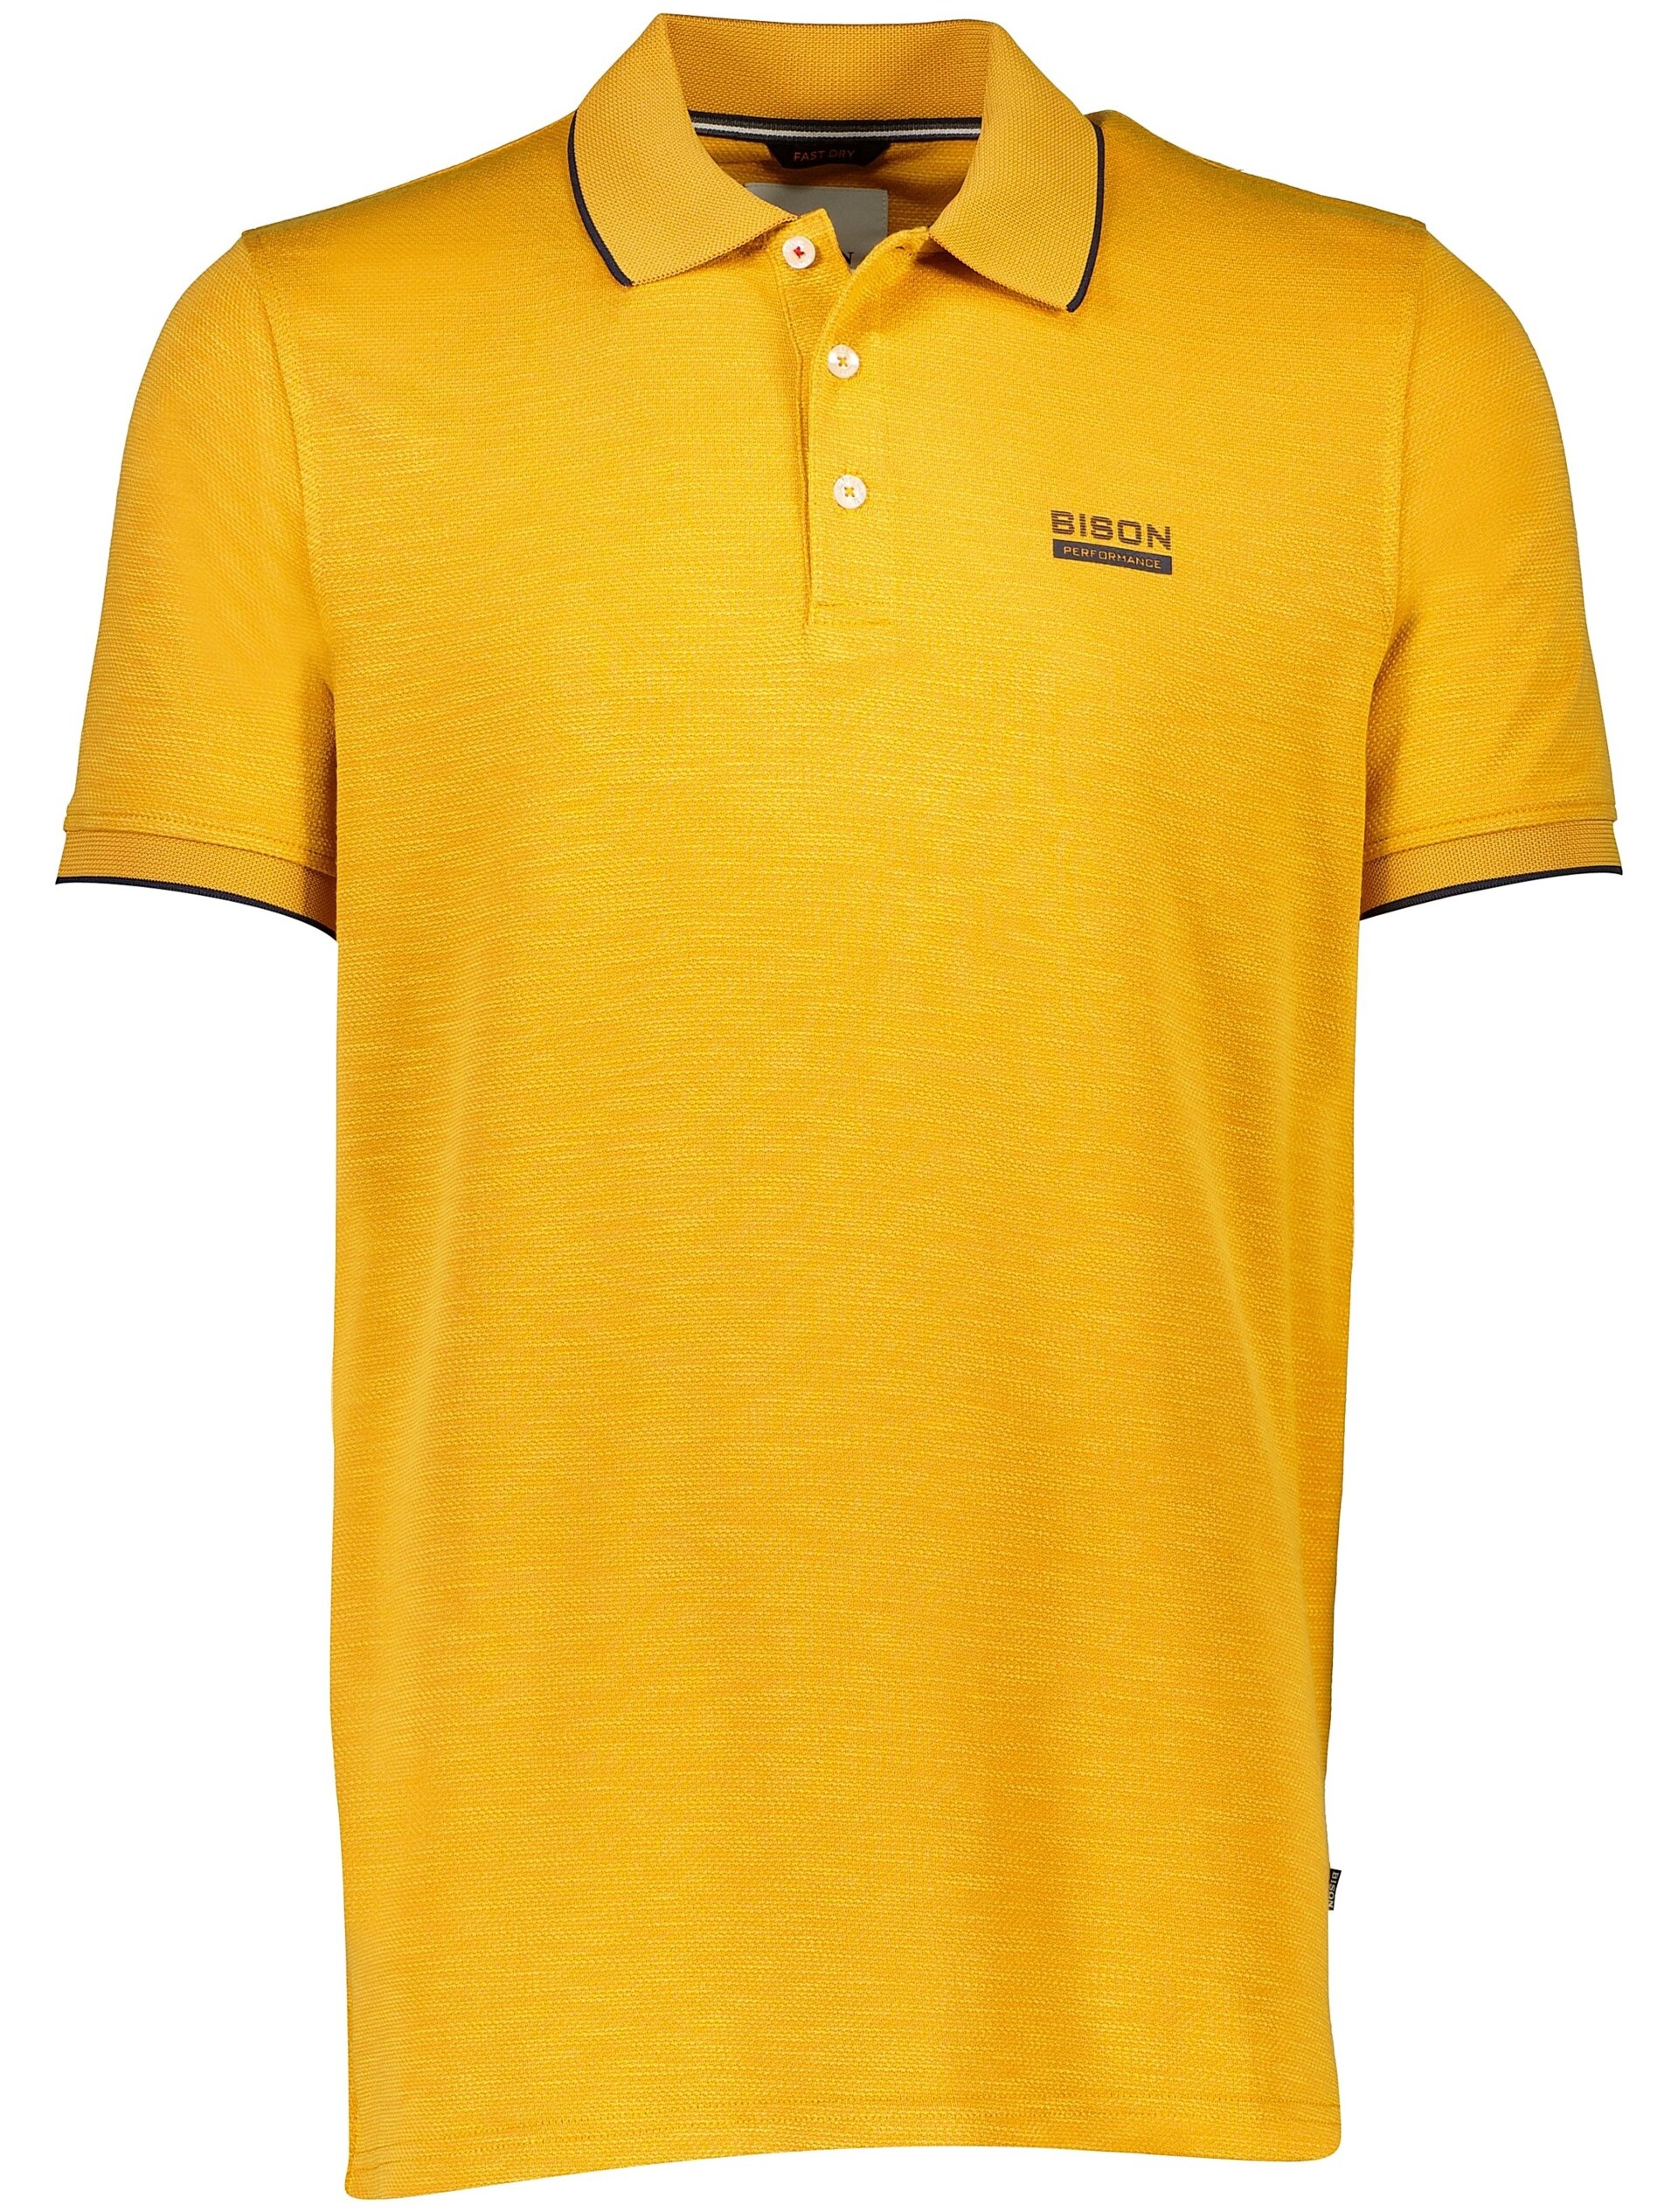 Bison Poloshirt gul / yellow